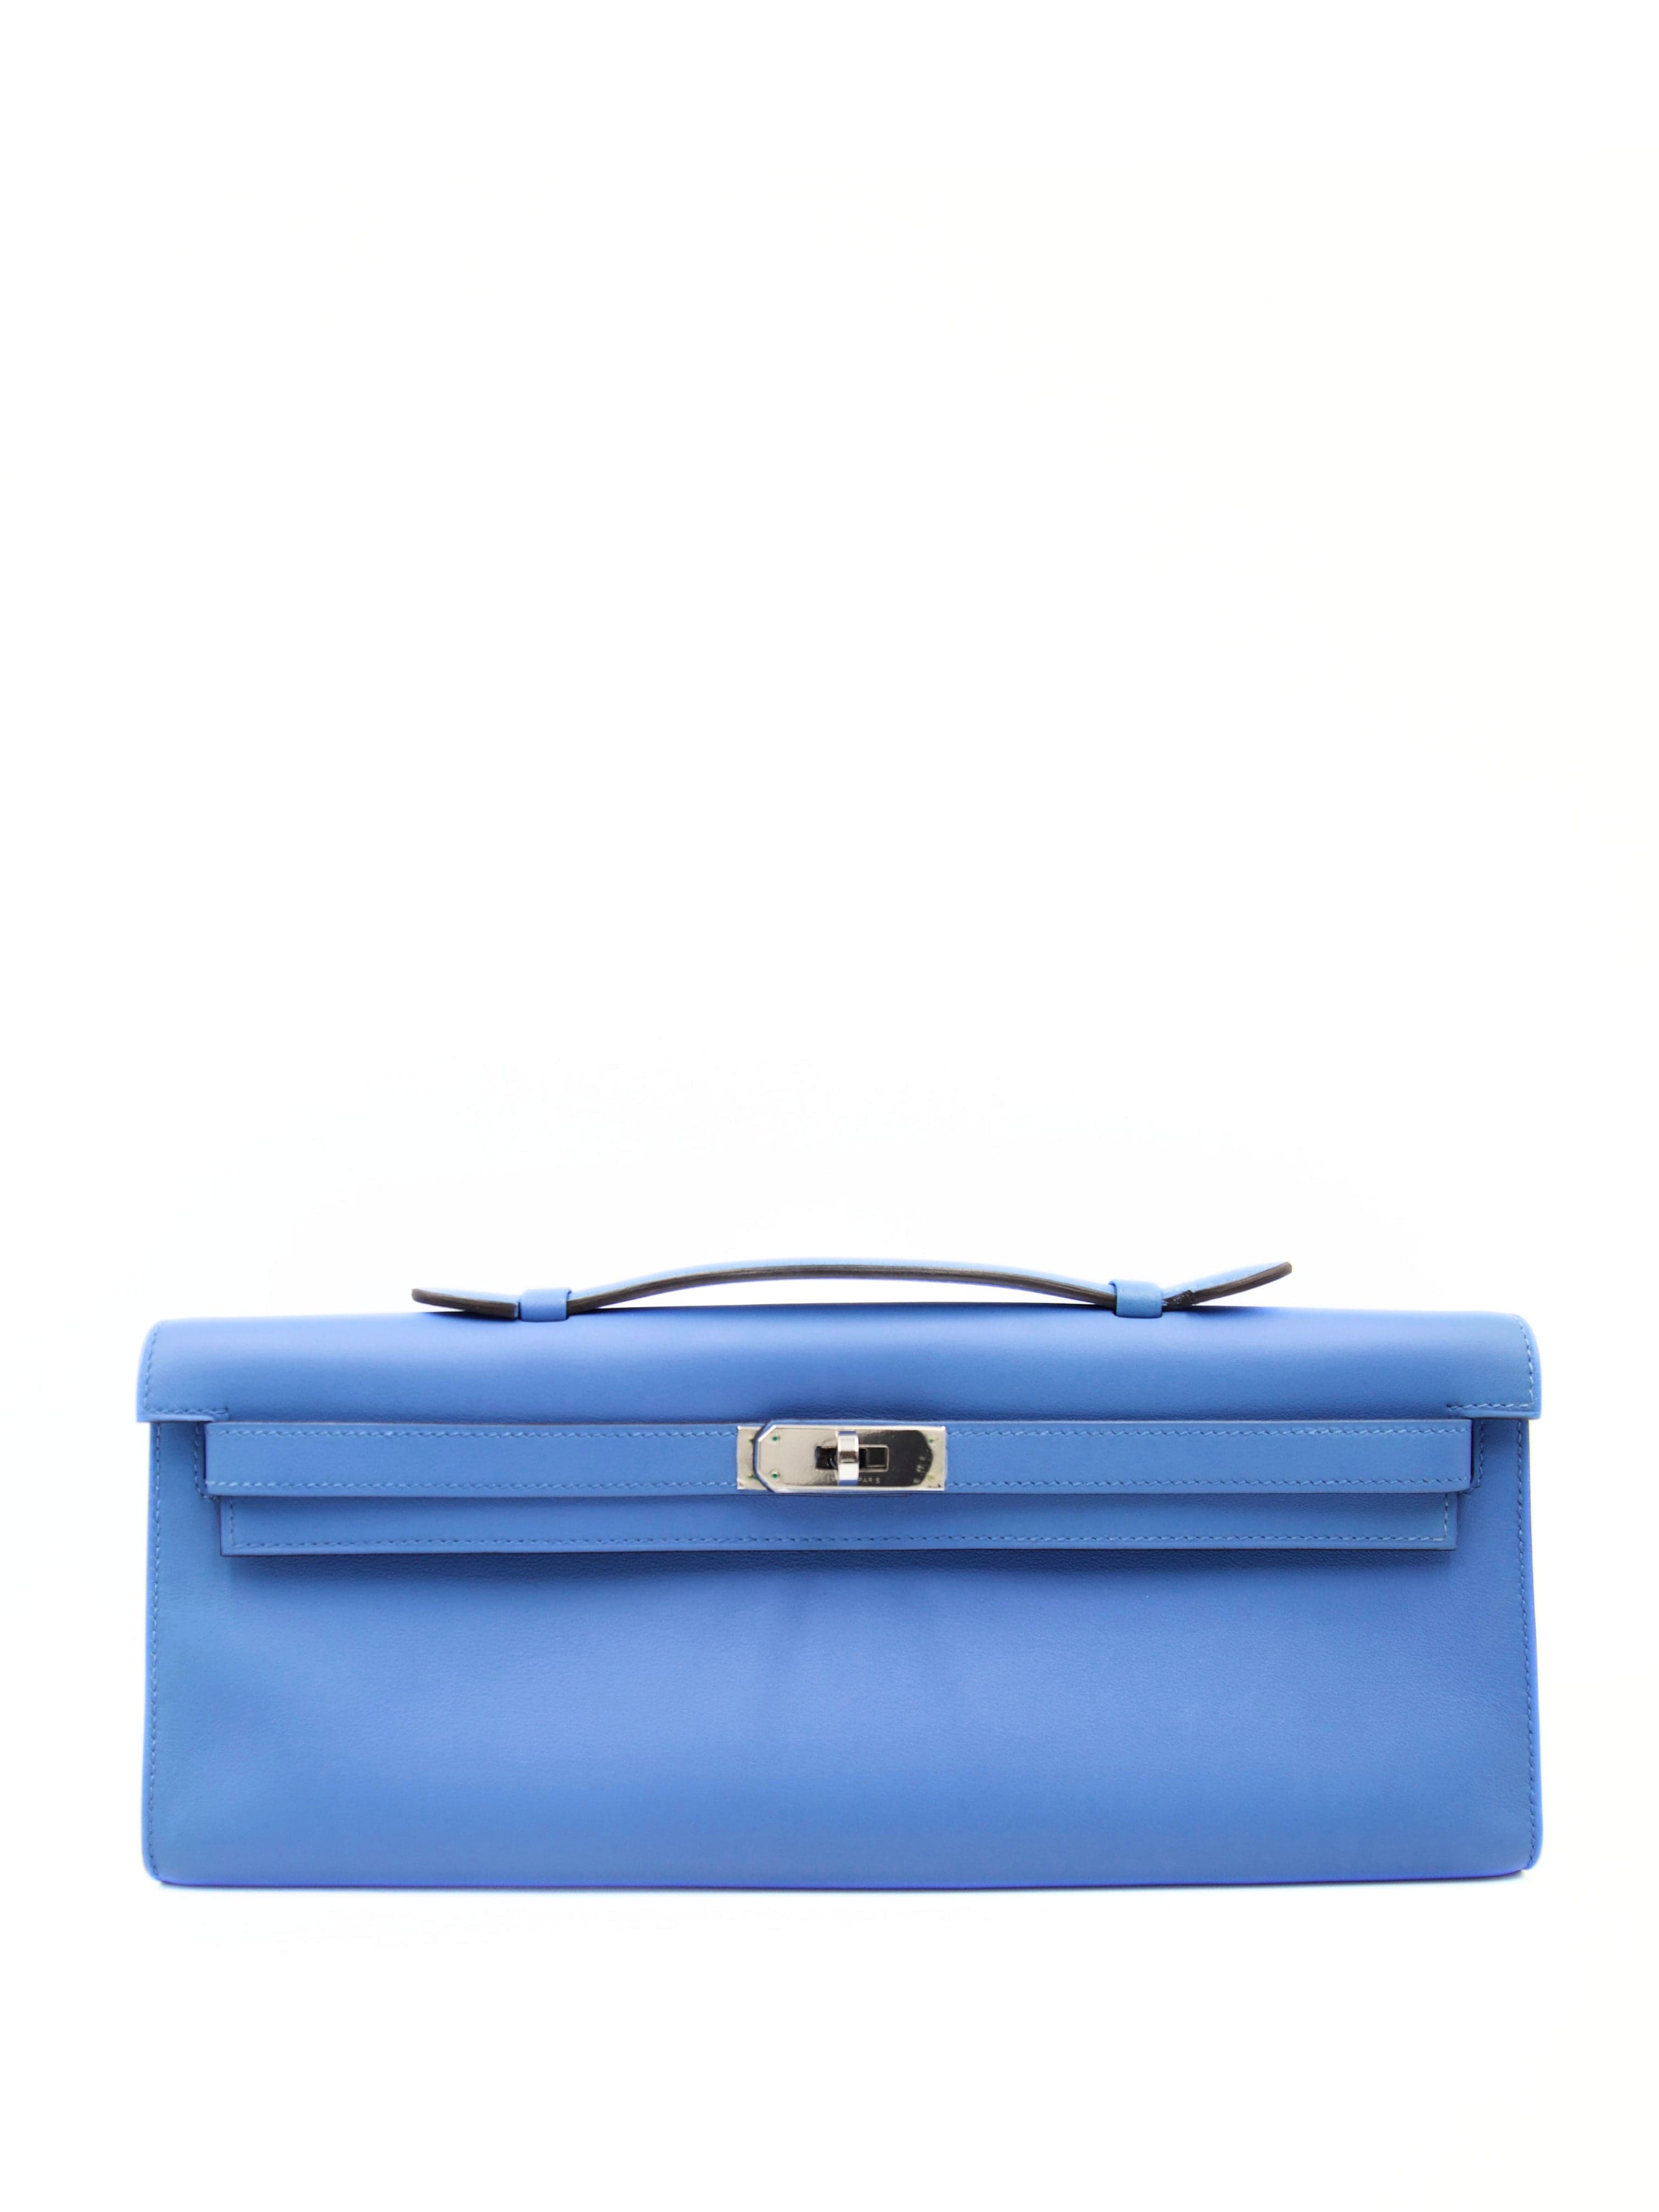 Hermès PRELOVED HERMÈS KELLY CUT BLUE PARADISE Swift Leather with Palladium Hardware